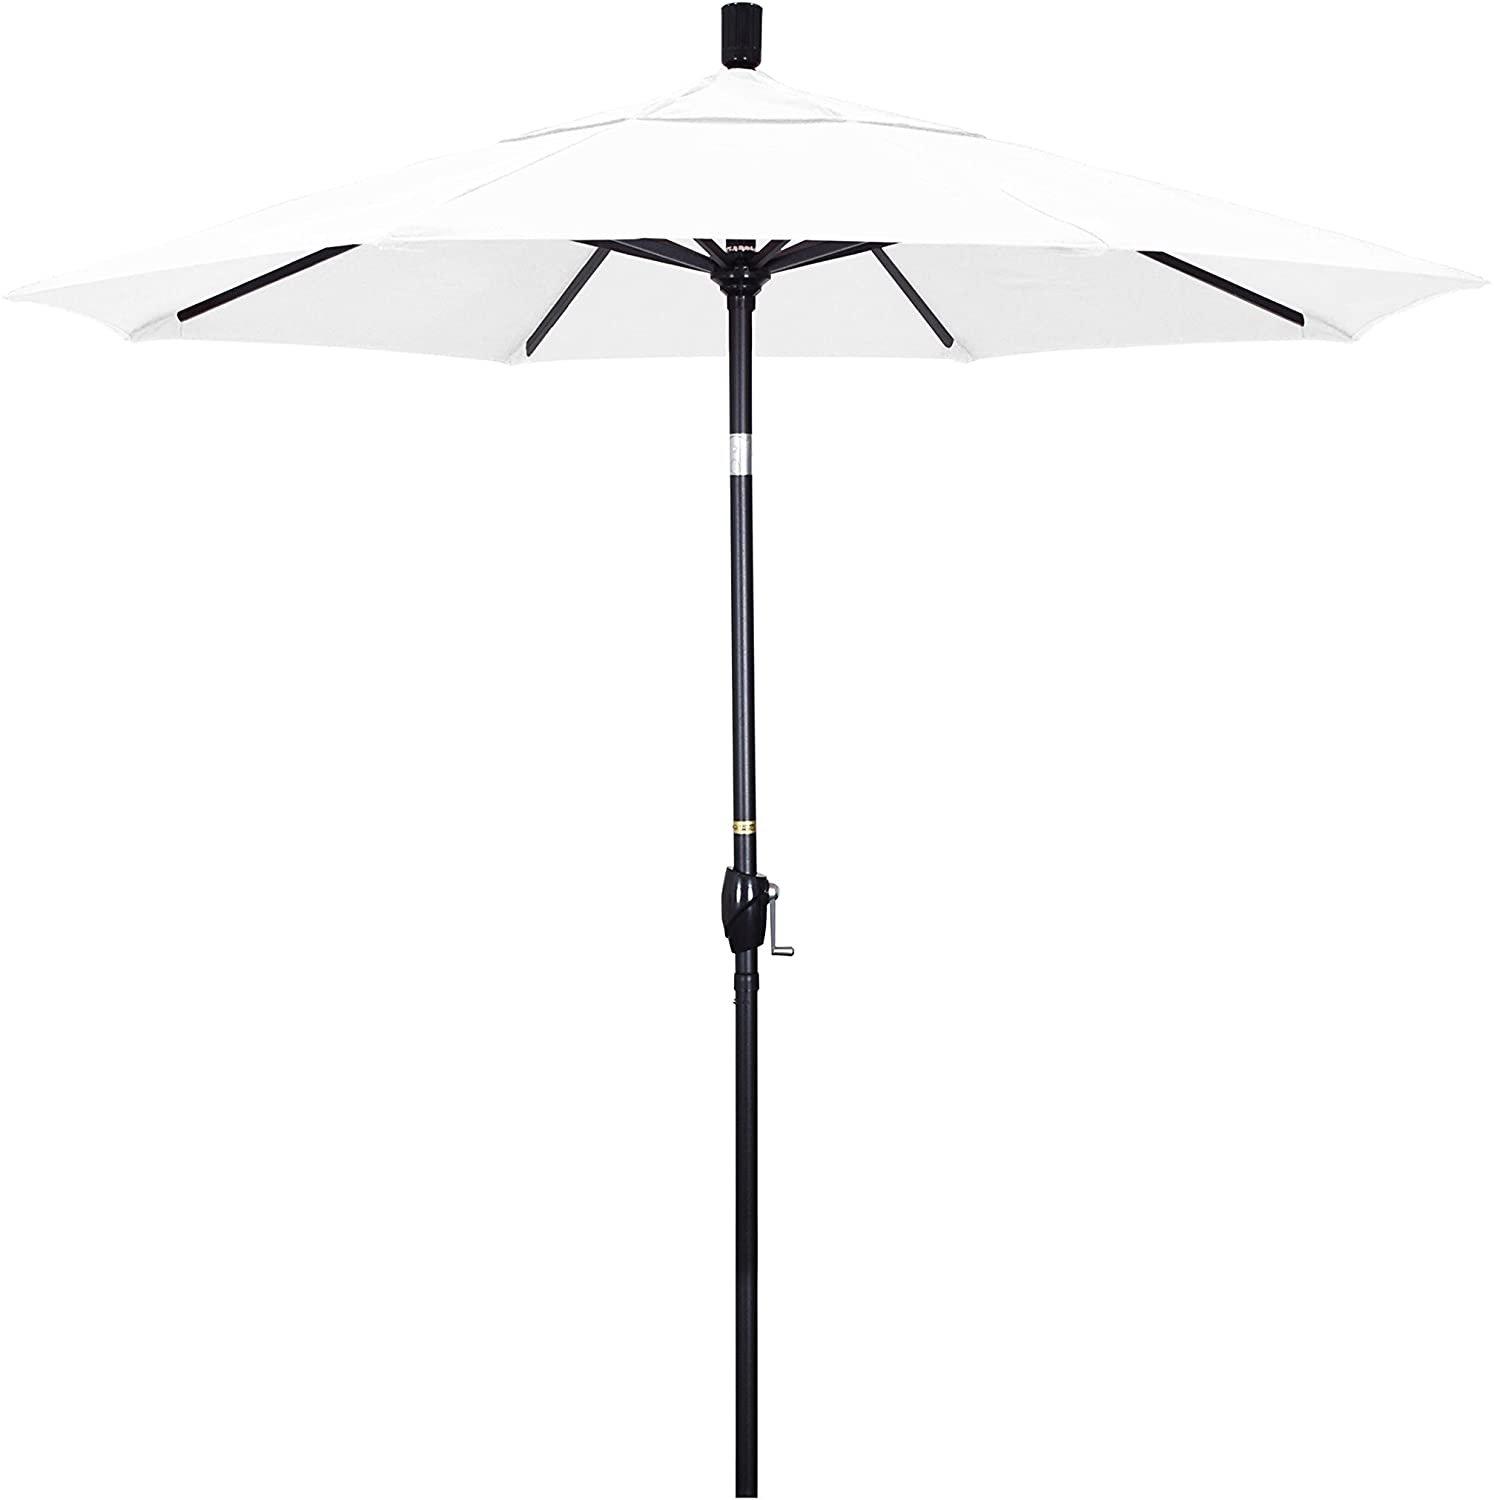 7 1/2 ft Market Umbrella with Black Aluminum Pole